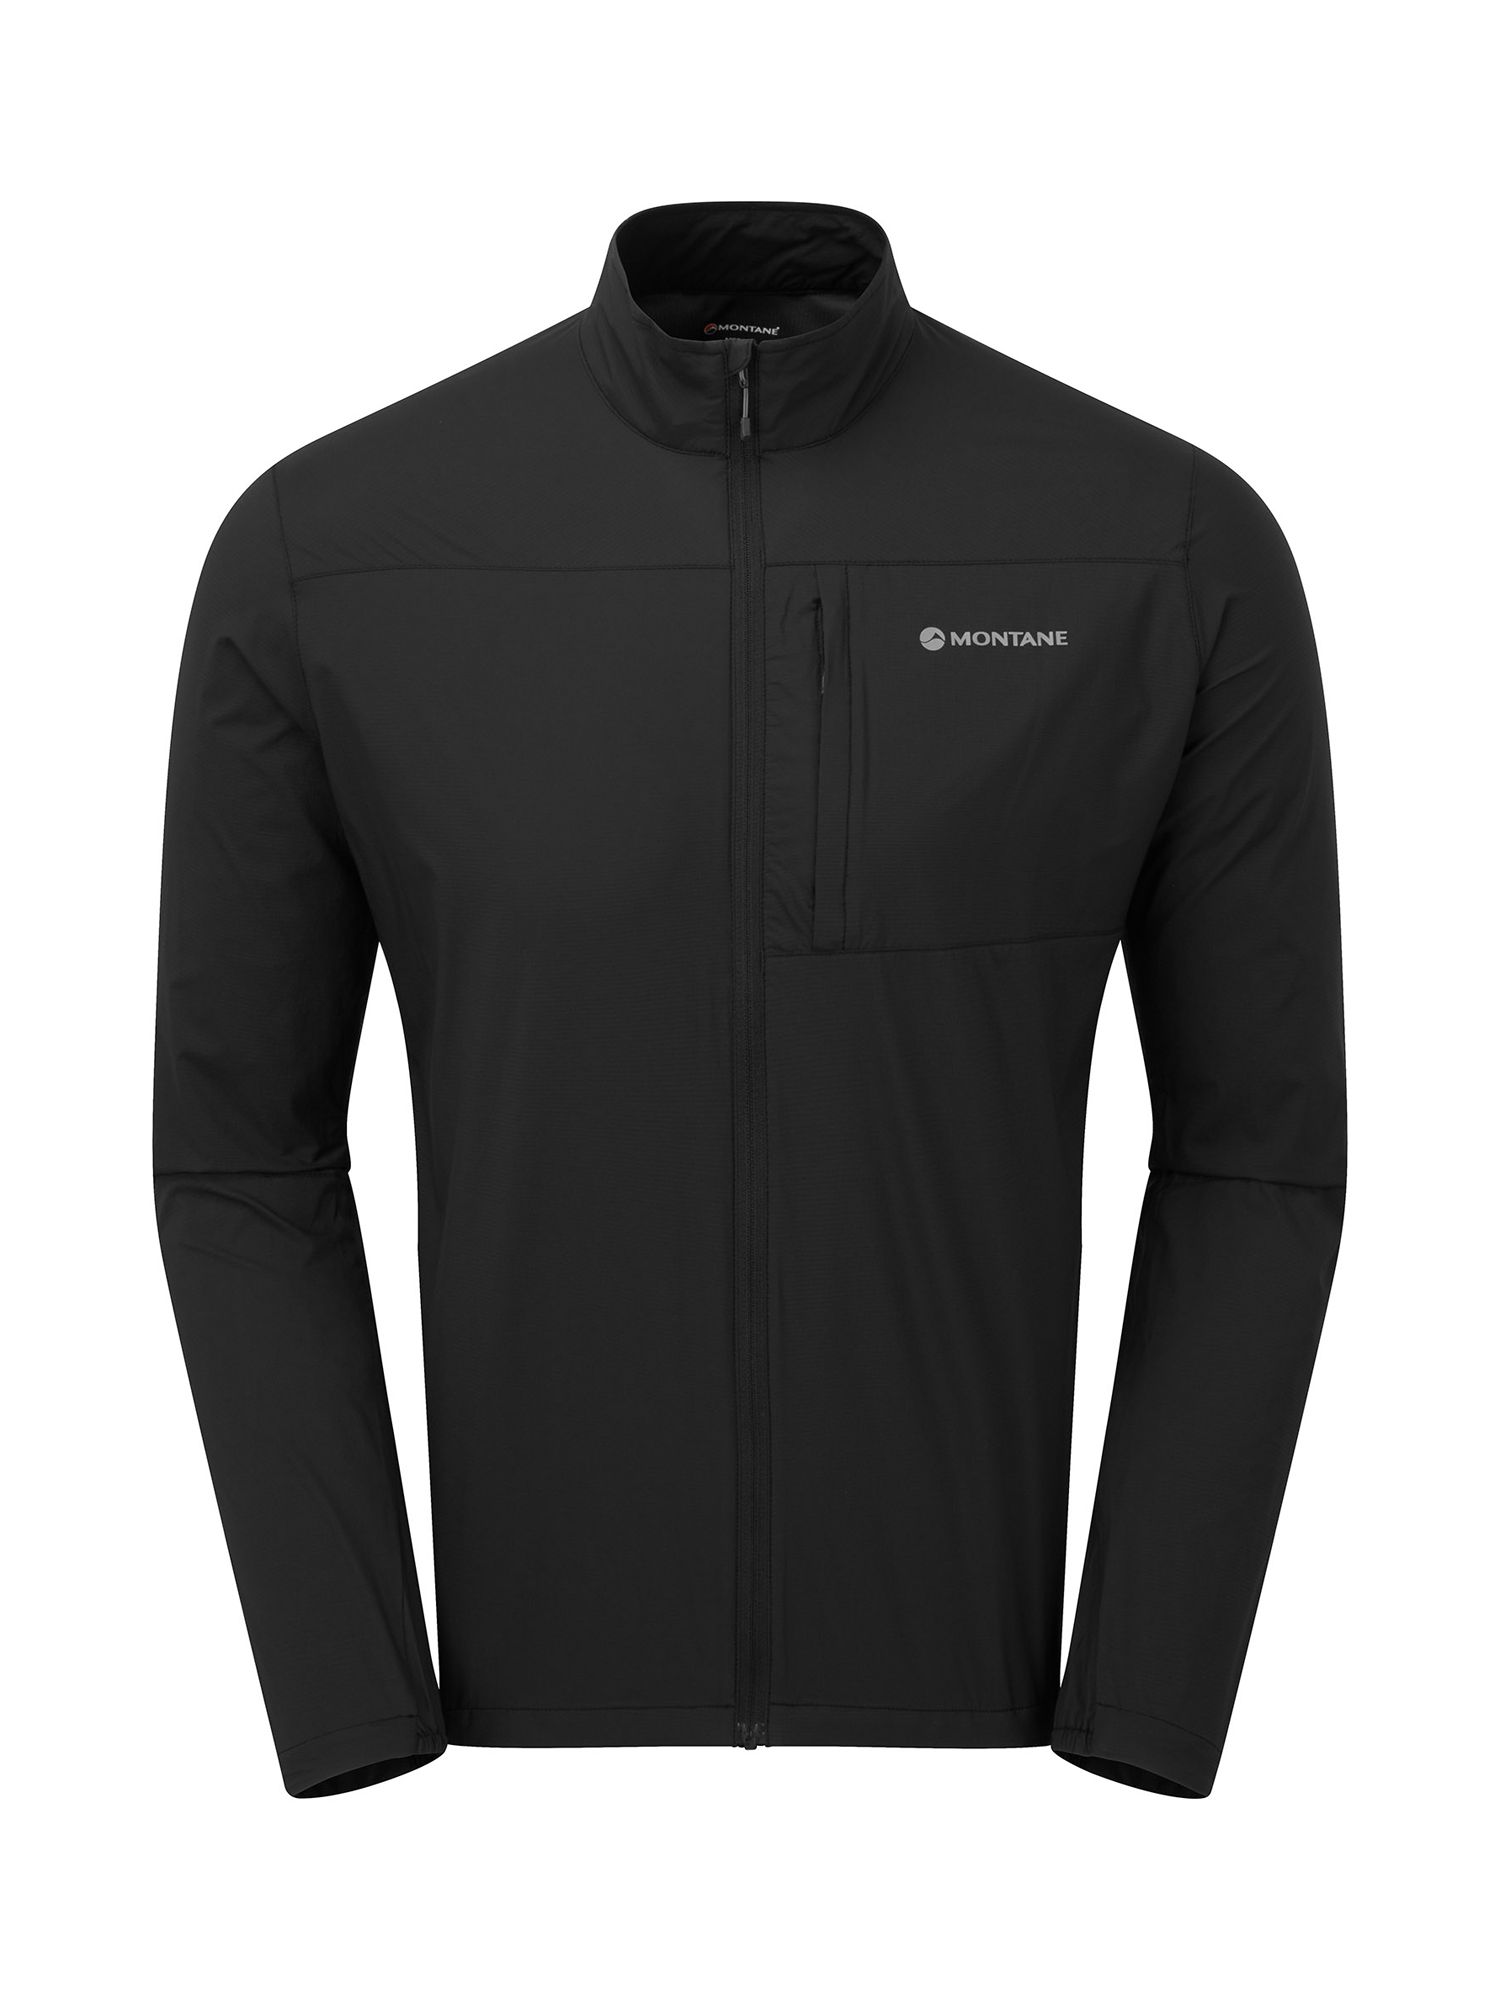 Buy Montane Featherlite Windproof Jacket Online at johnlewis.com